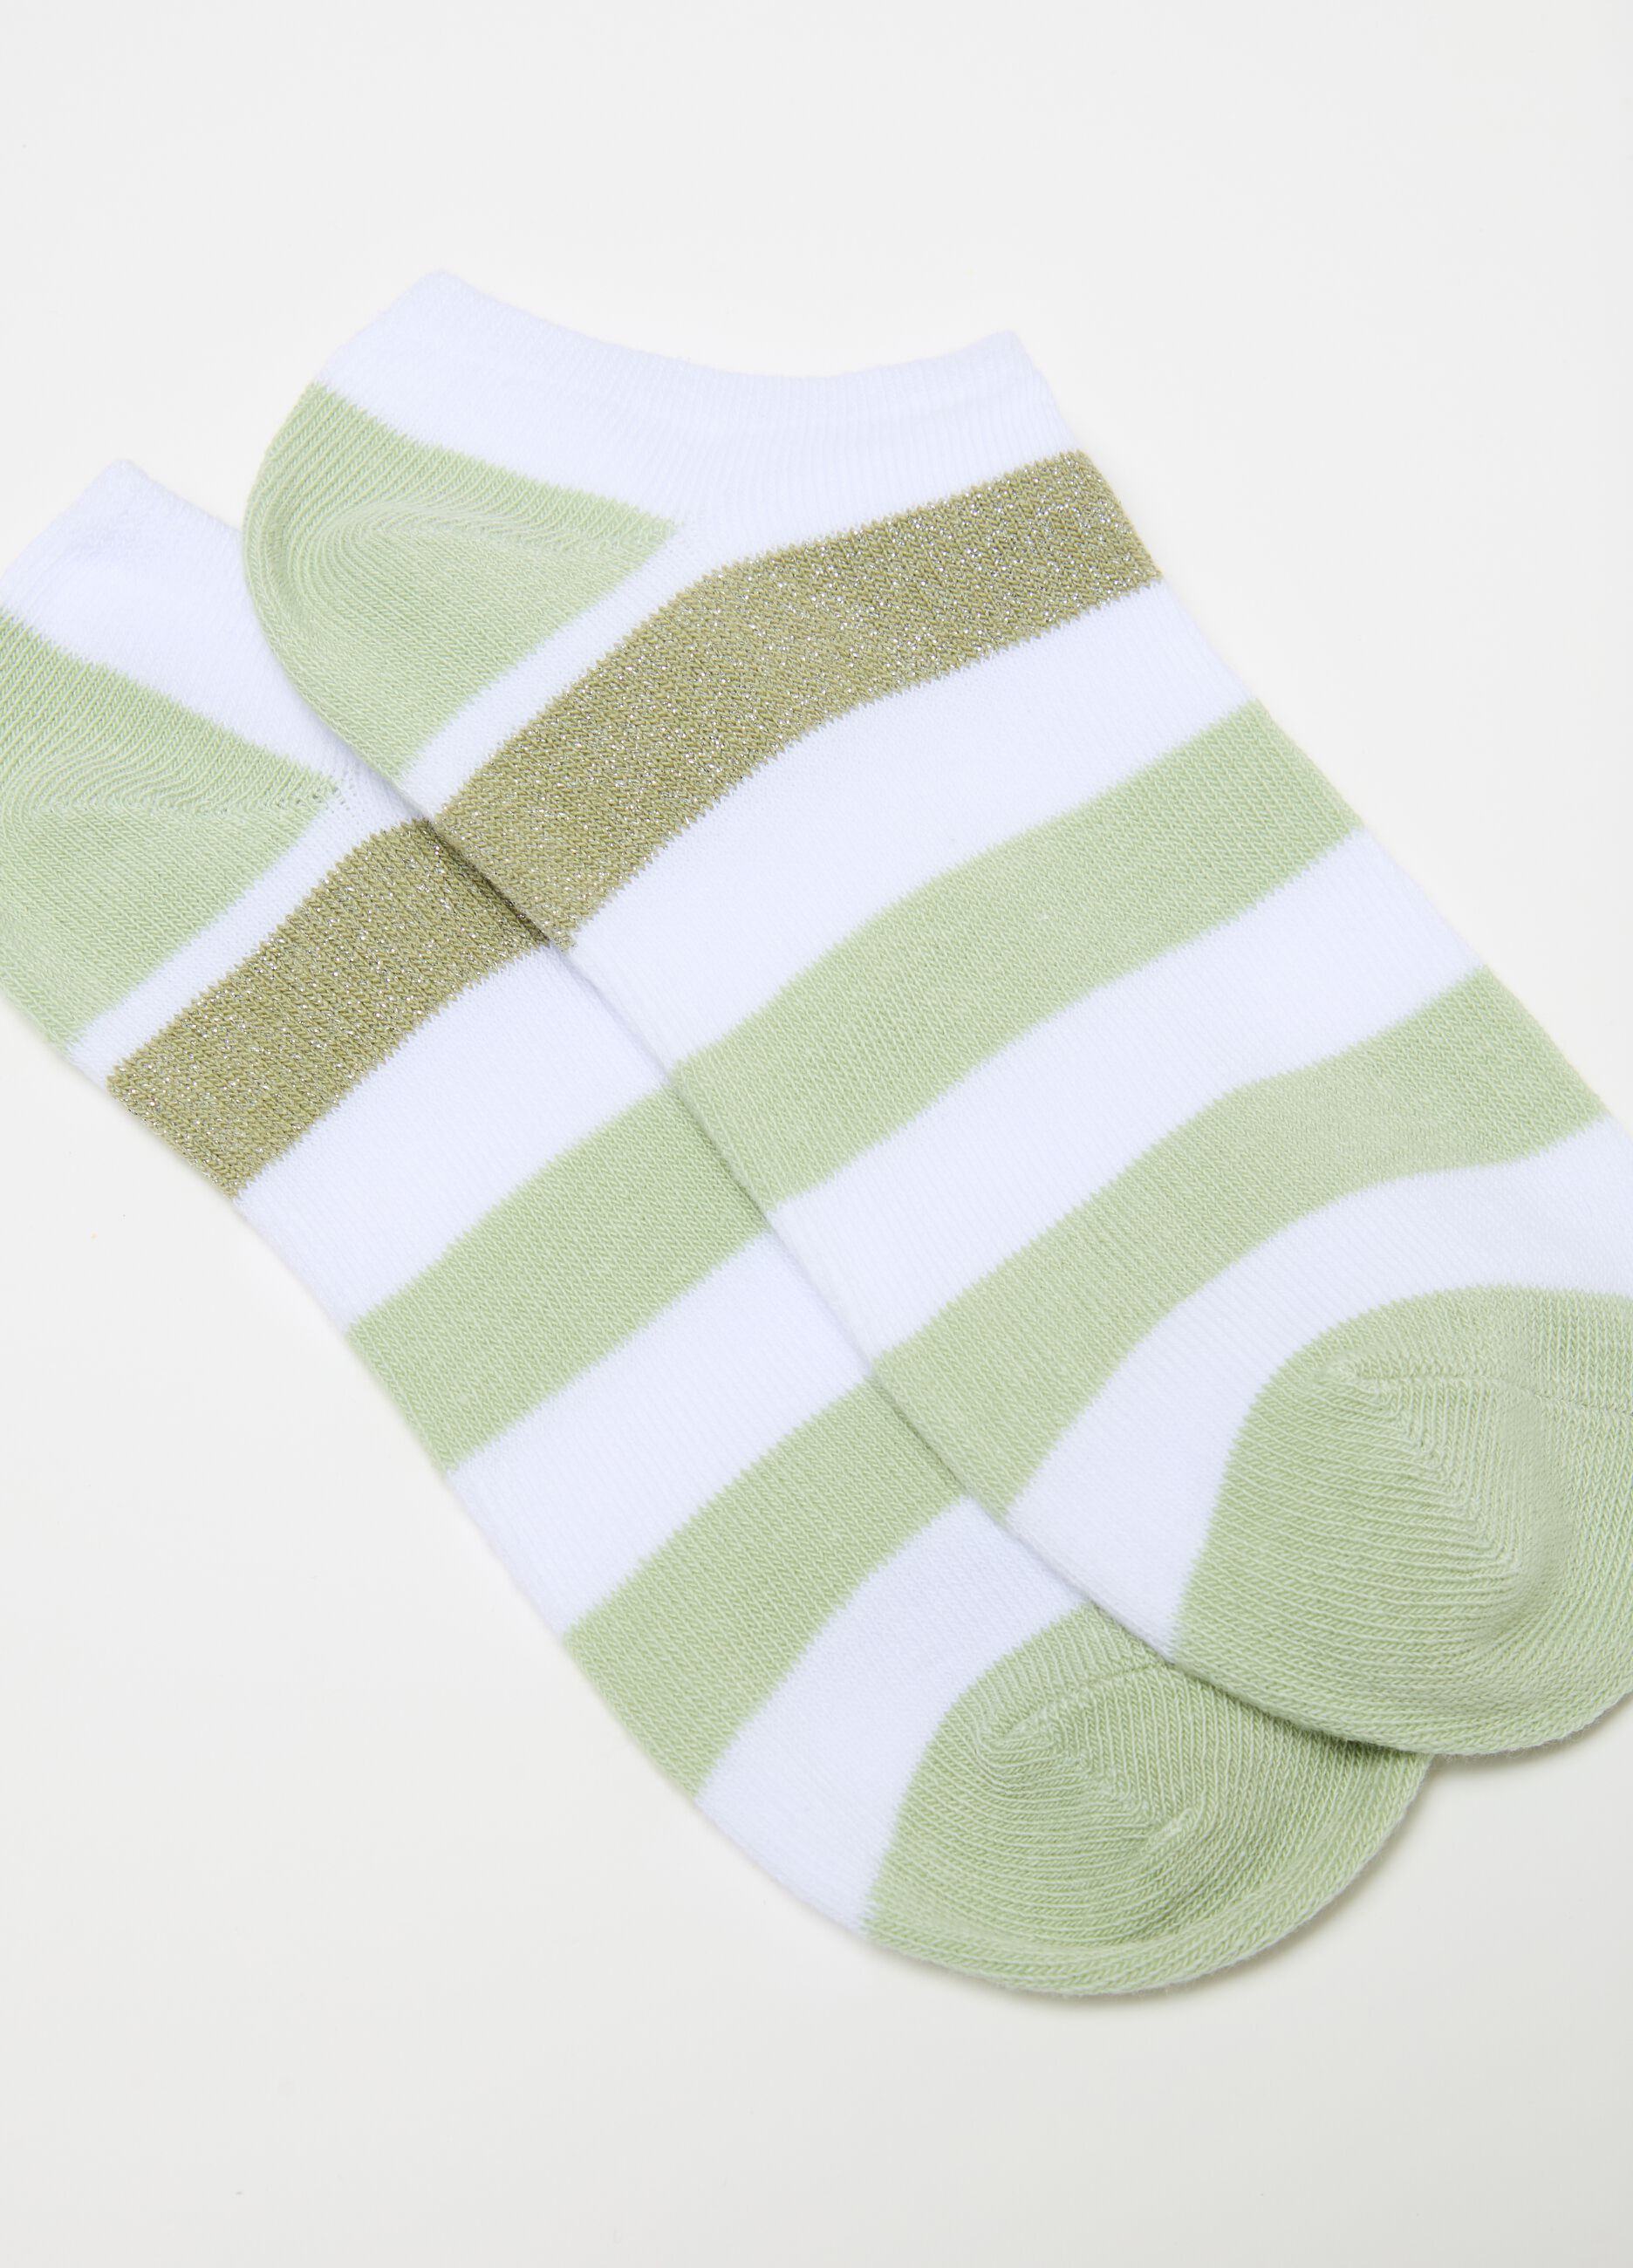 Multipack siete calcetines invisibles de algodón orgánico